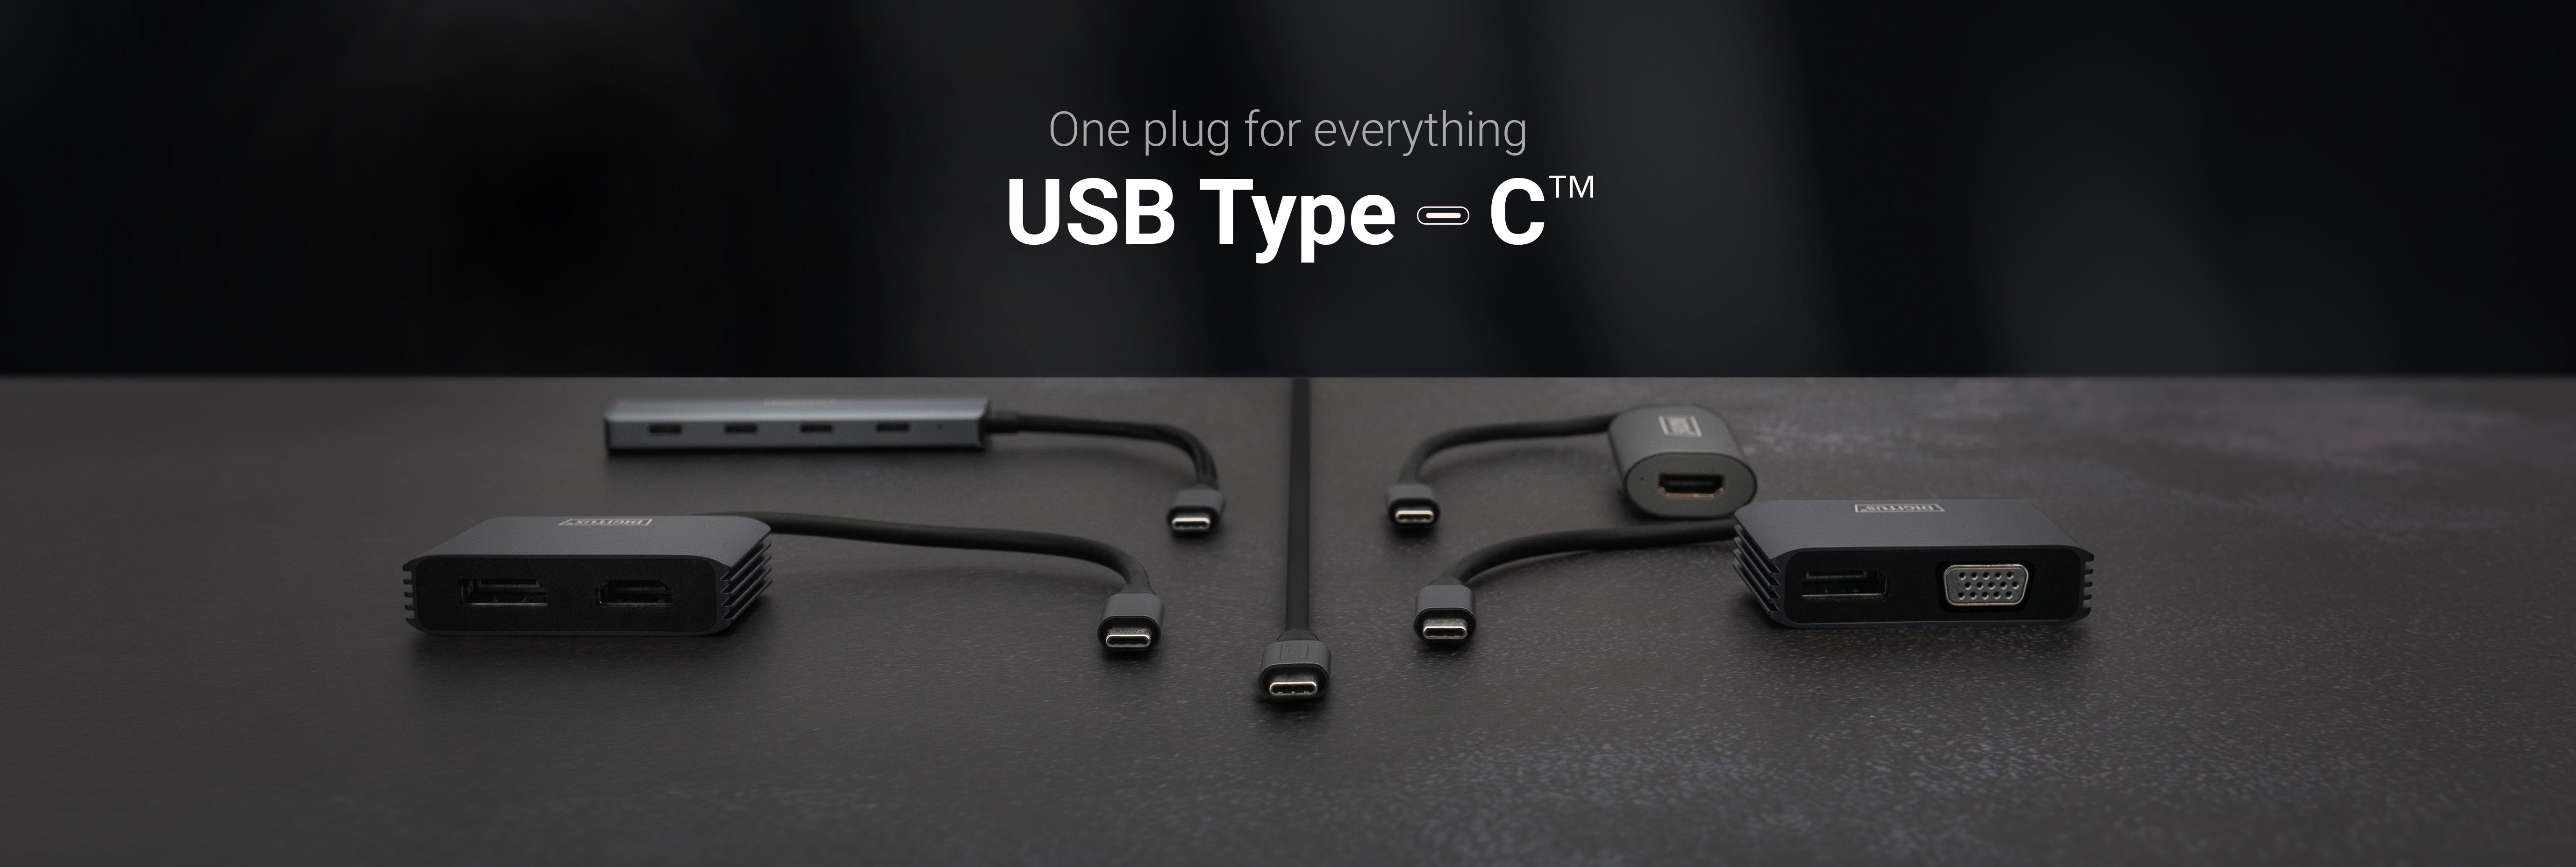 USB Type-C header